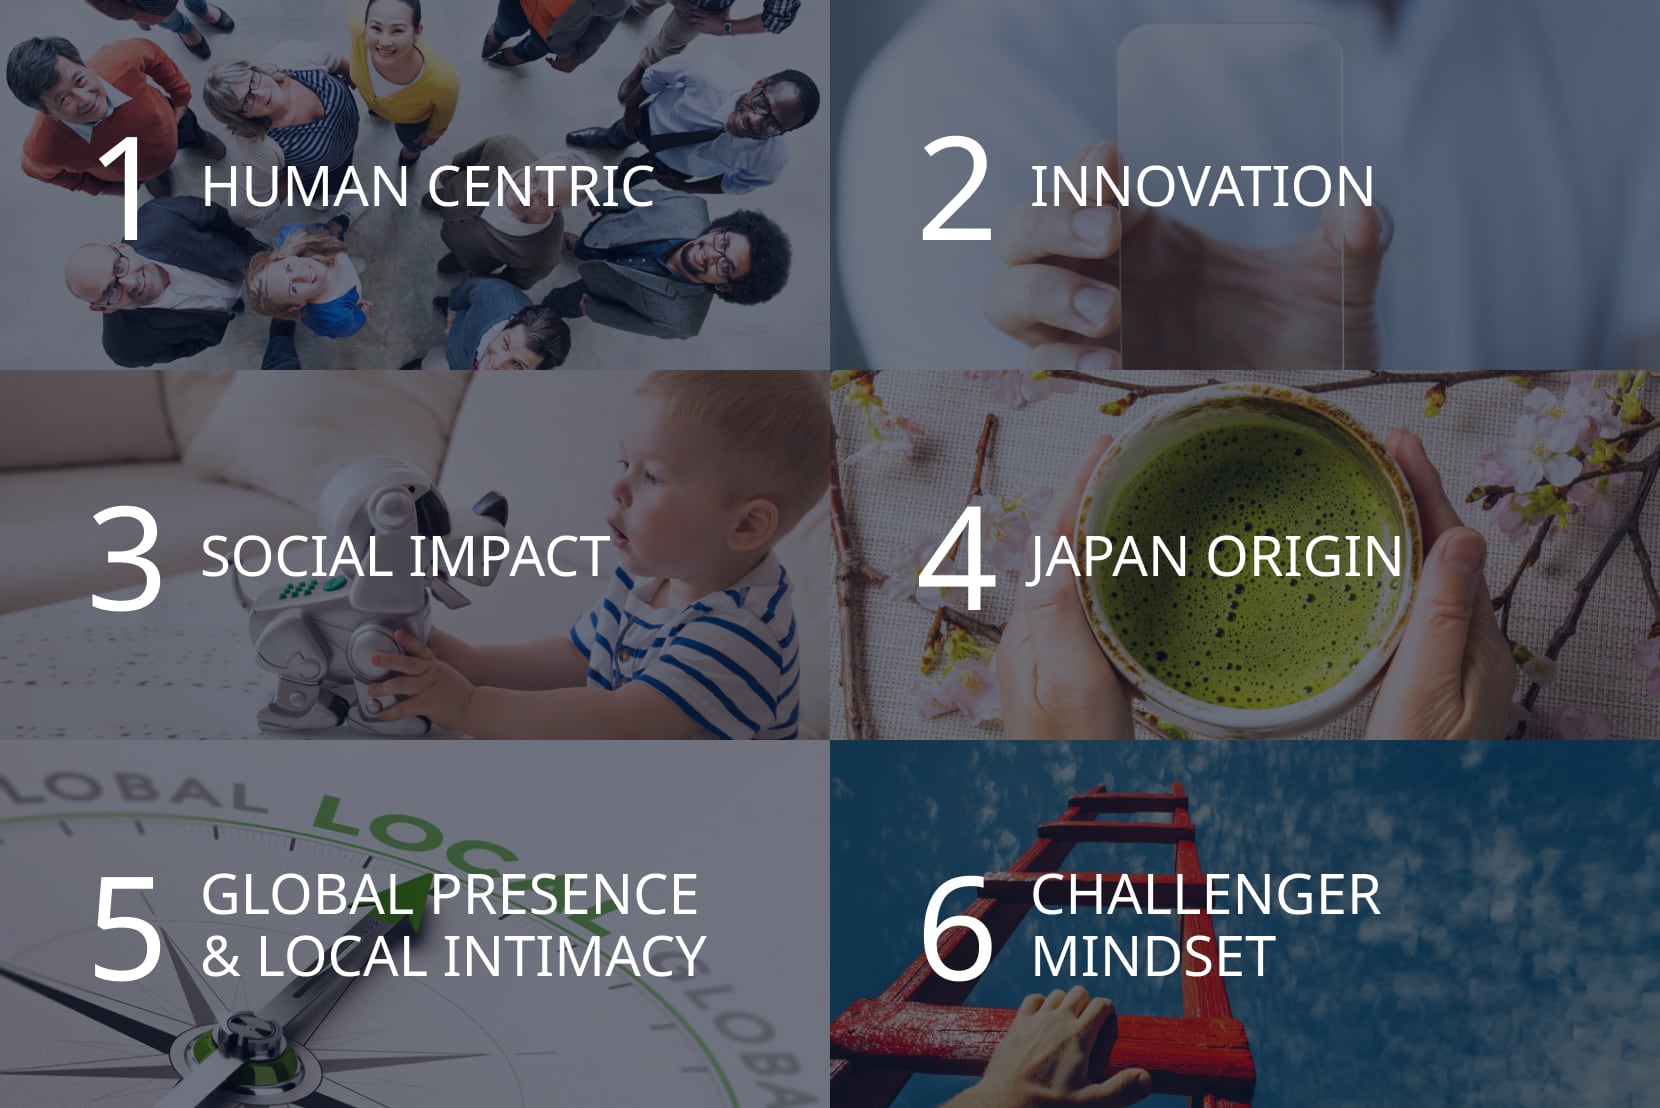 1. Human Centric, 2. Innovation, 3. Social Impact, 4. Japan Origin, 5. Global Presence & Local Intimacy, 6. Challenger Mindset